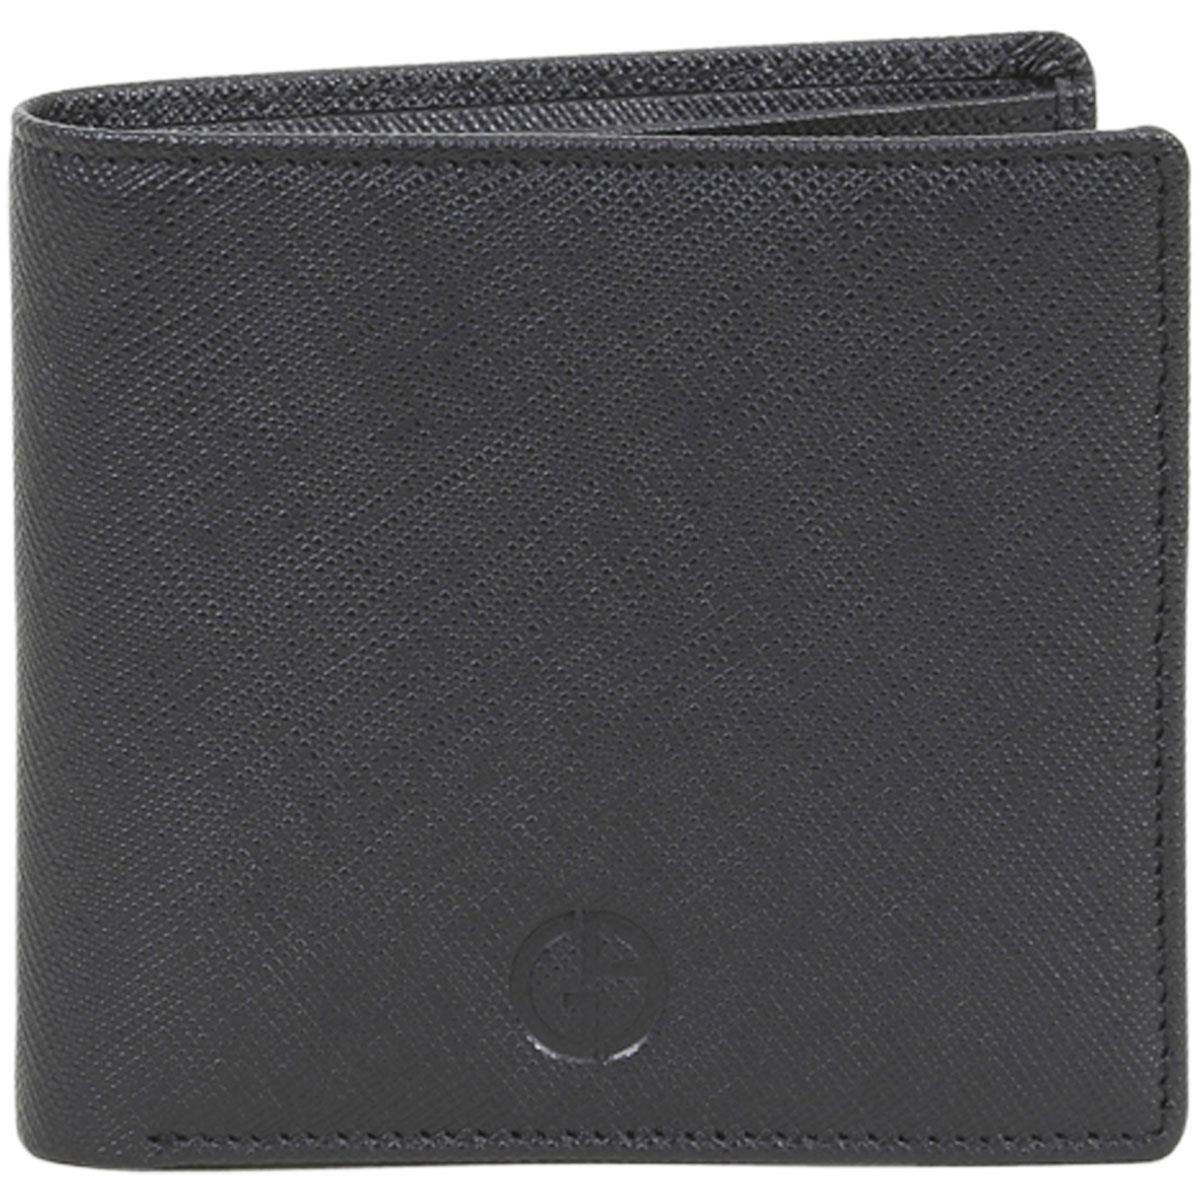 Giorgio Armani Men`s Portafoglio Leather Bi-fold Wallet Black